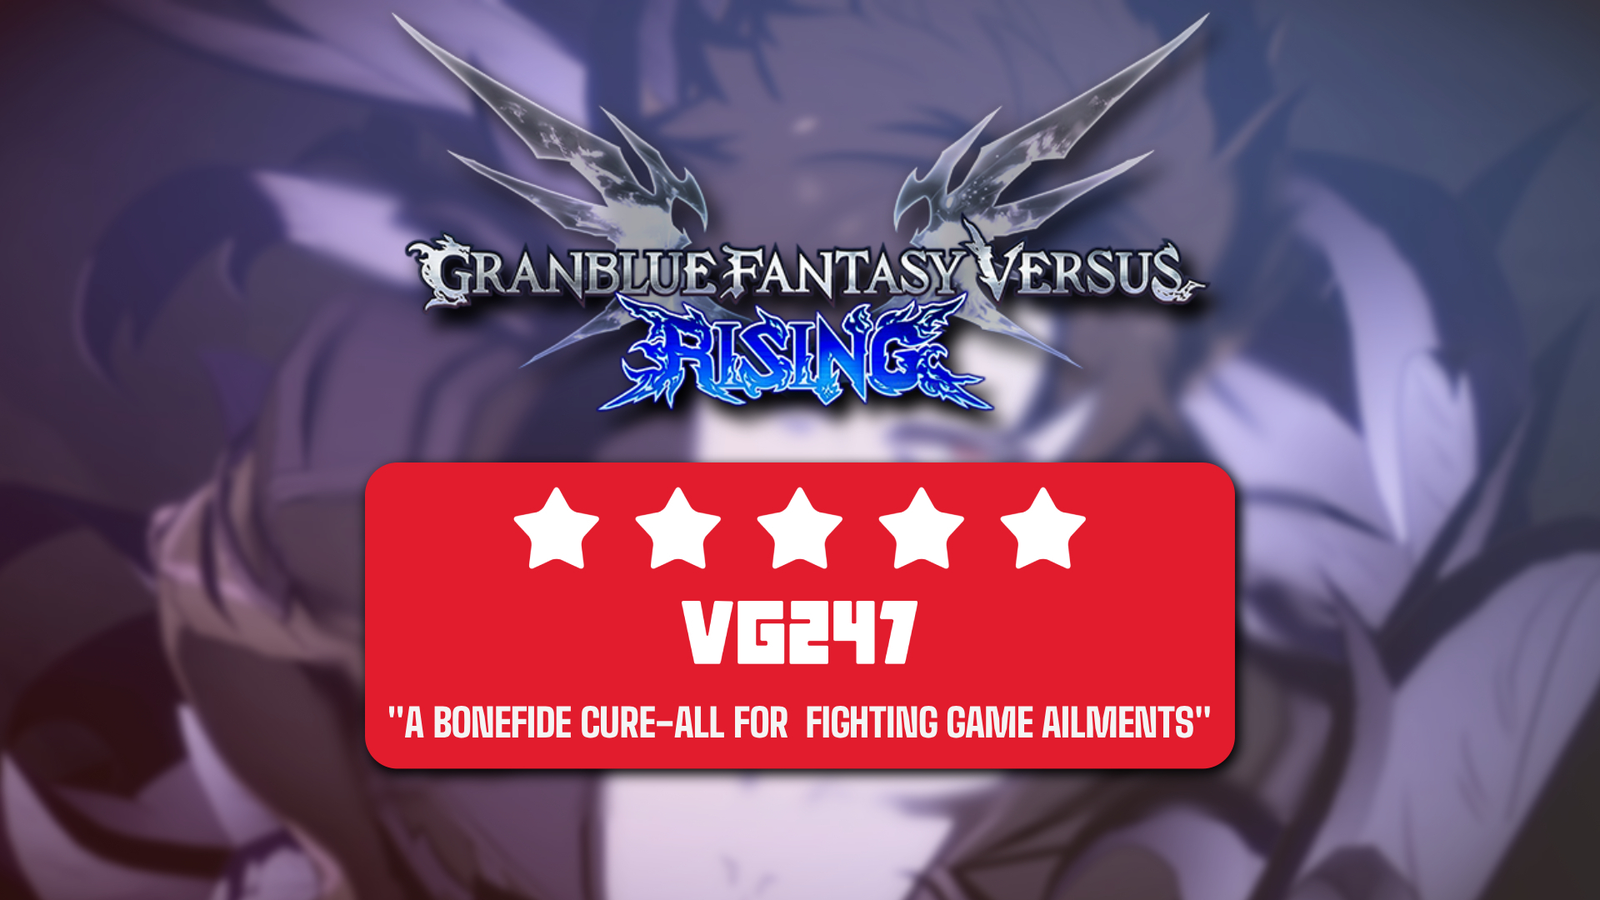 Granblue Fantasy Versus Rising Open Beta: Complete character